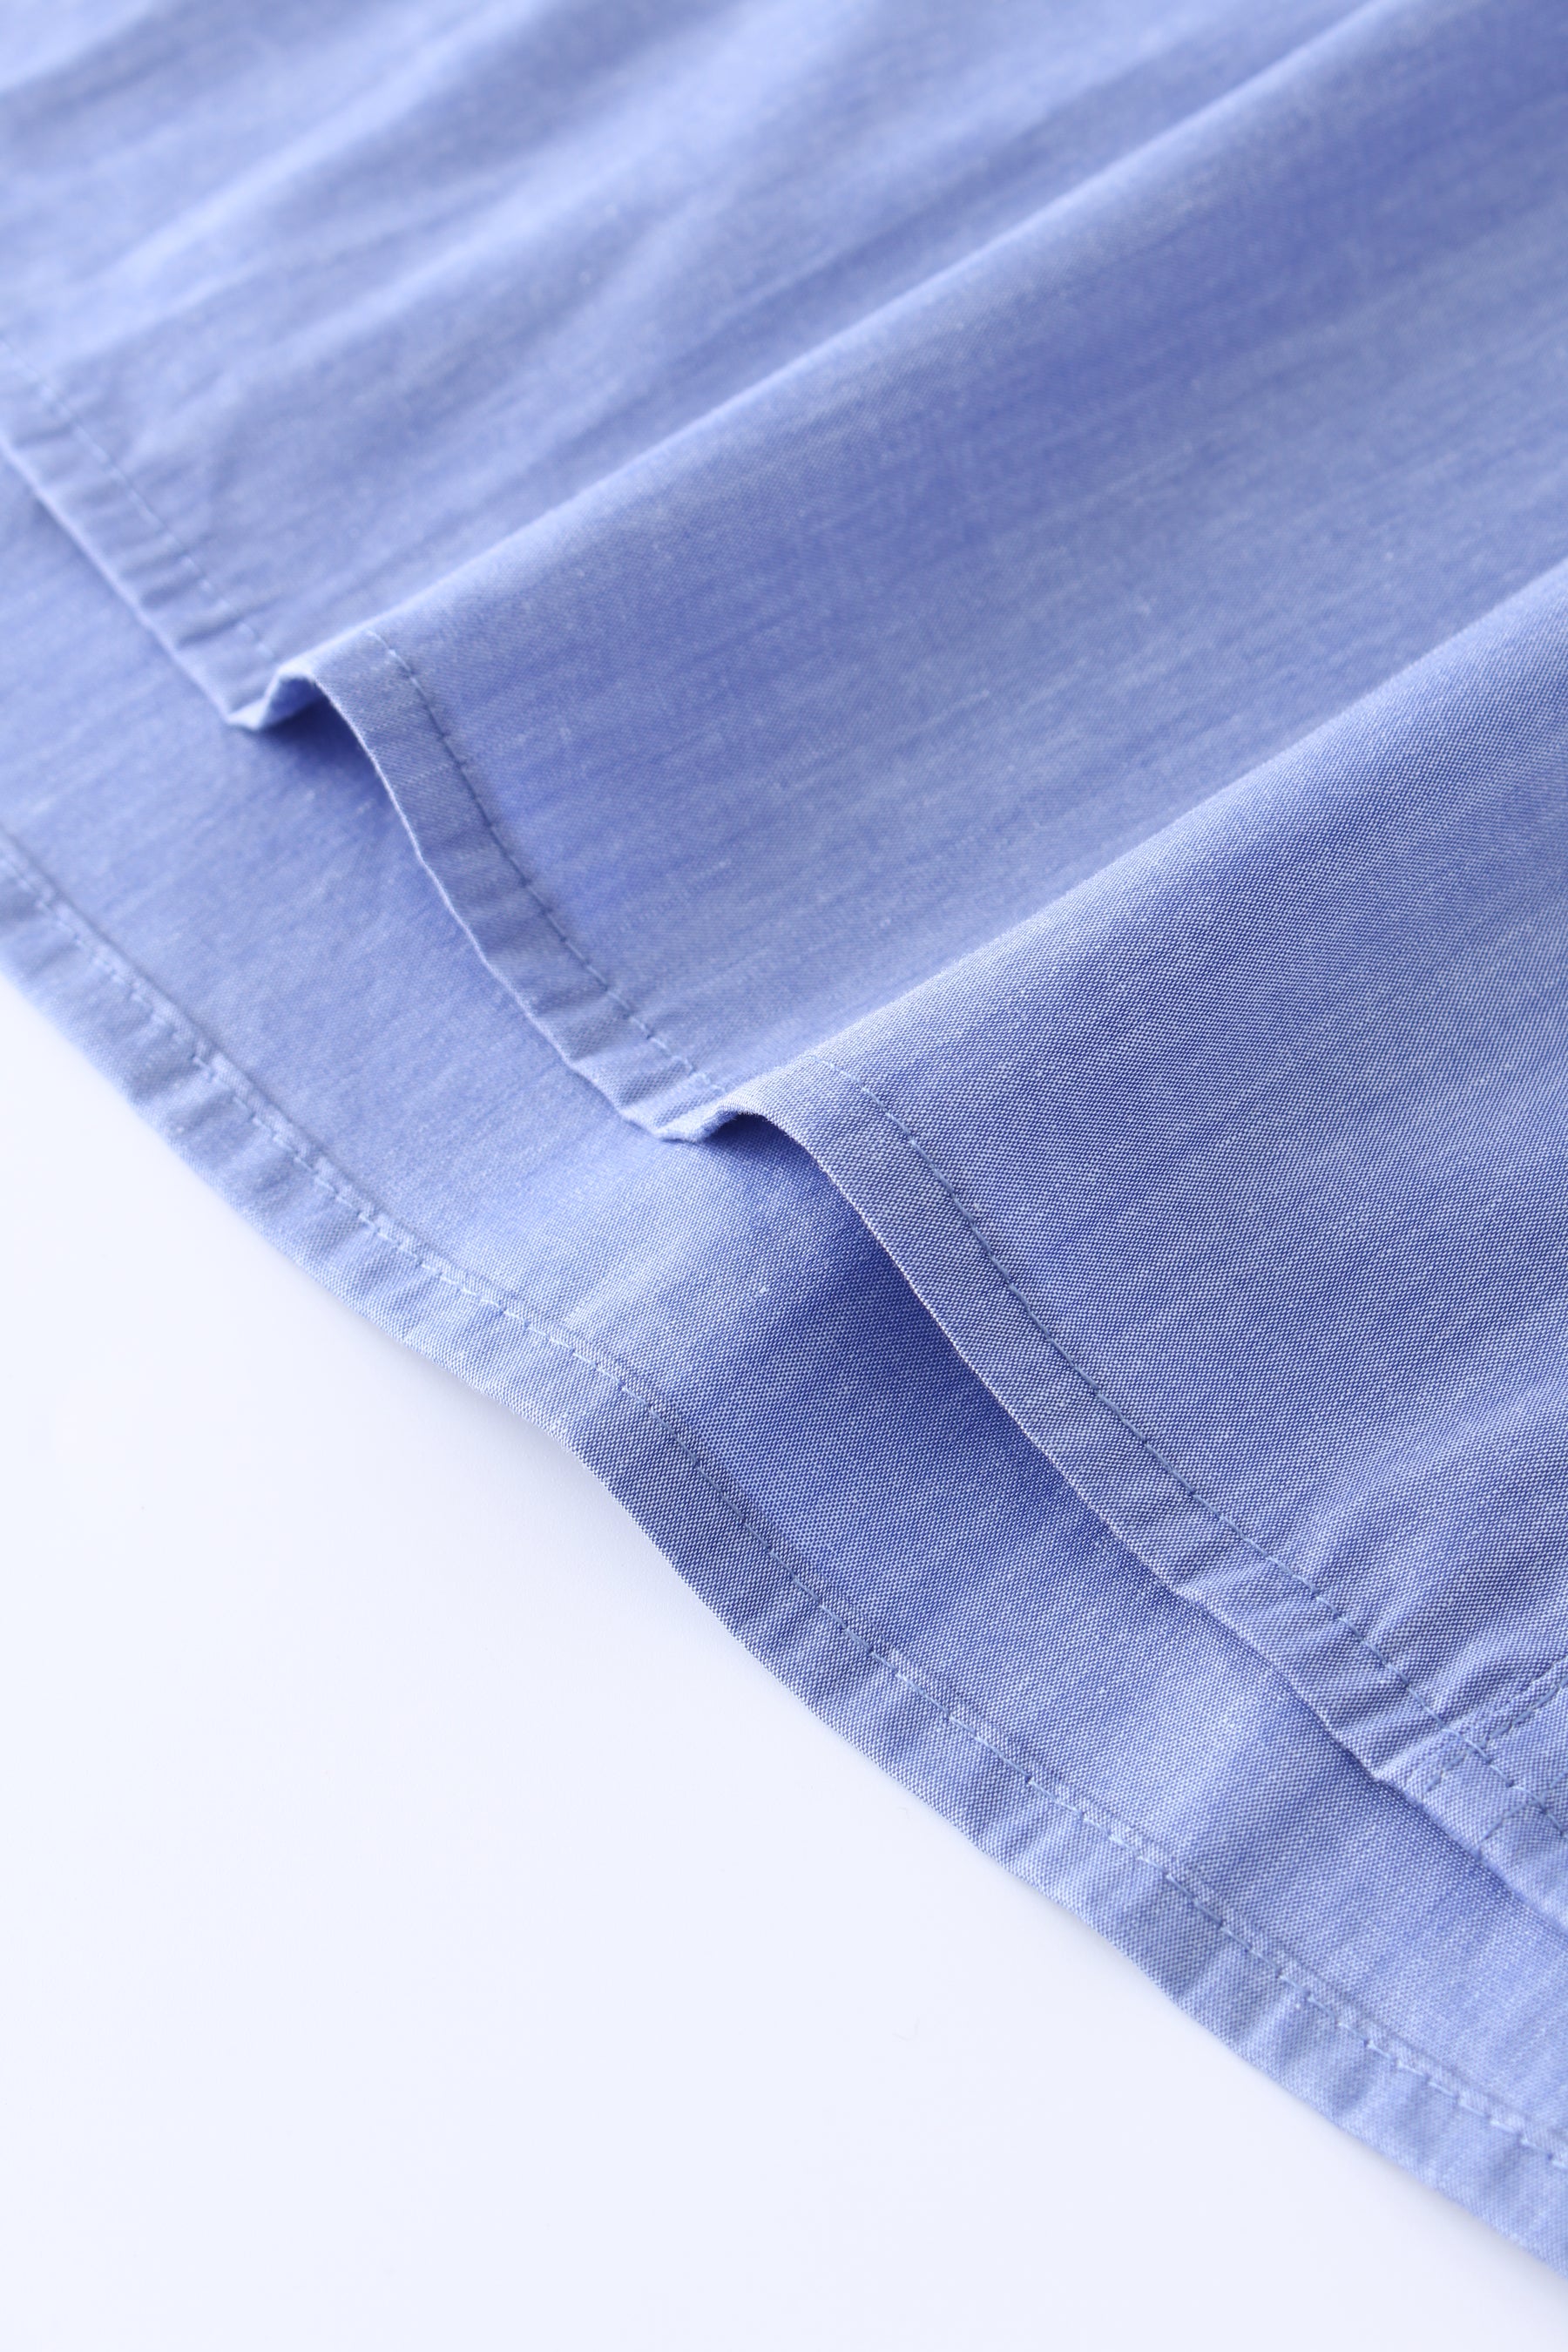 Waist Pull Skirt-Chambray Blue